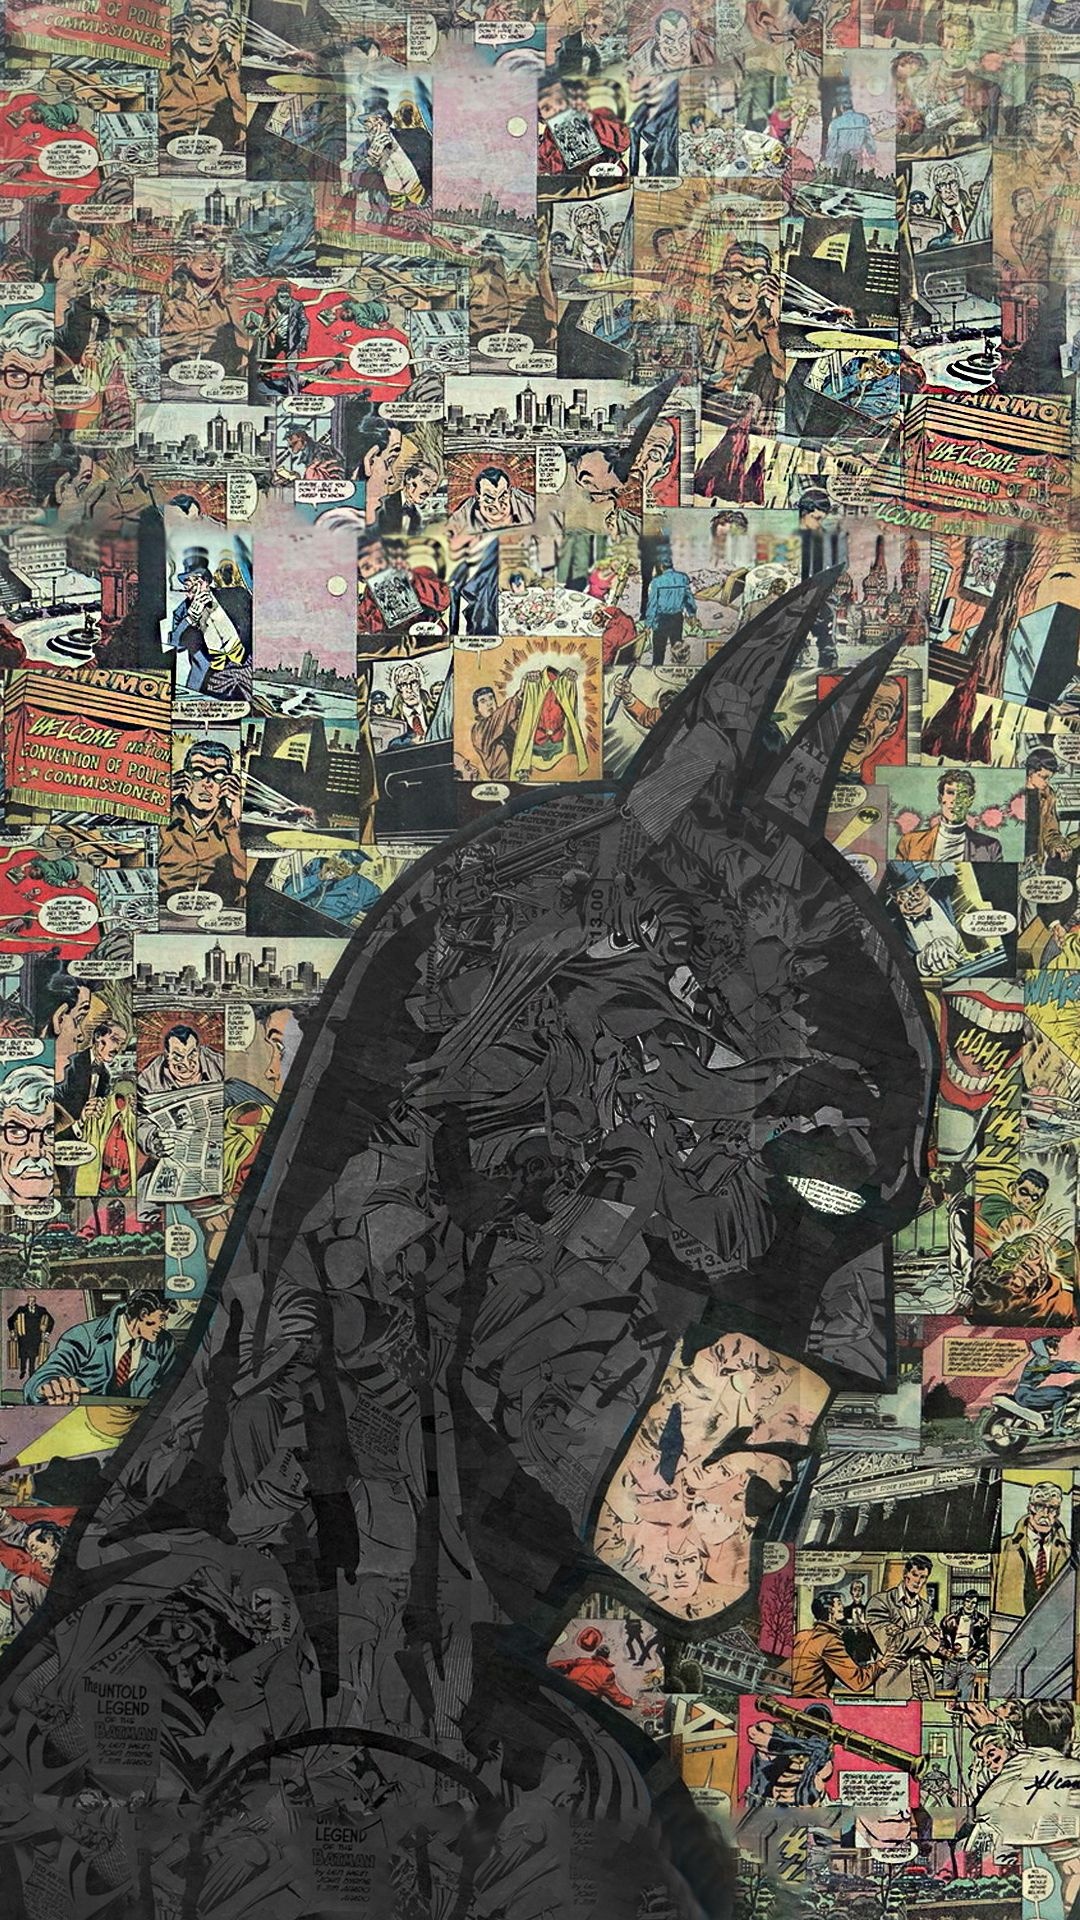 HD wallpaper, Vigilante Theme, Batman, Samsung Full Hd Batman Wallpaper Image, 1080X1920 Full Hd Phone, Iconic Symbol, Comic Inspired Style, Superhero Figure